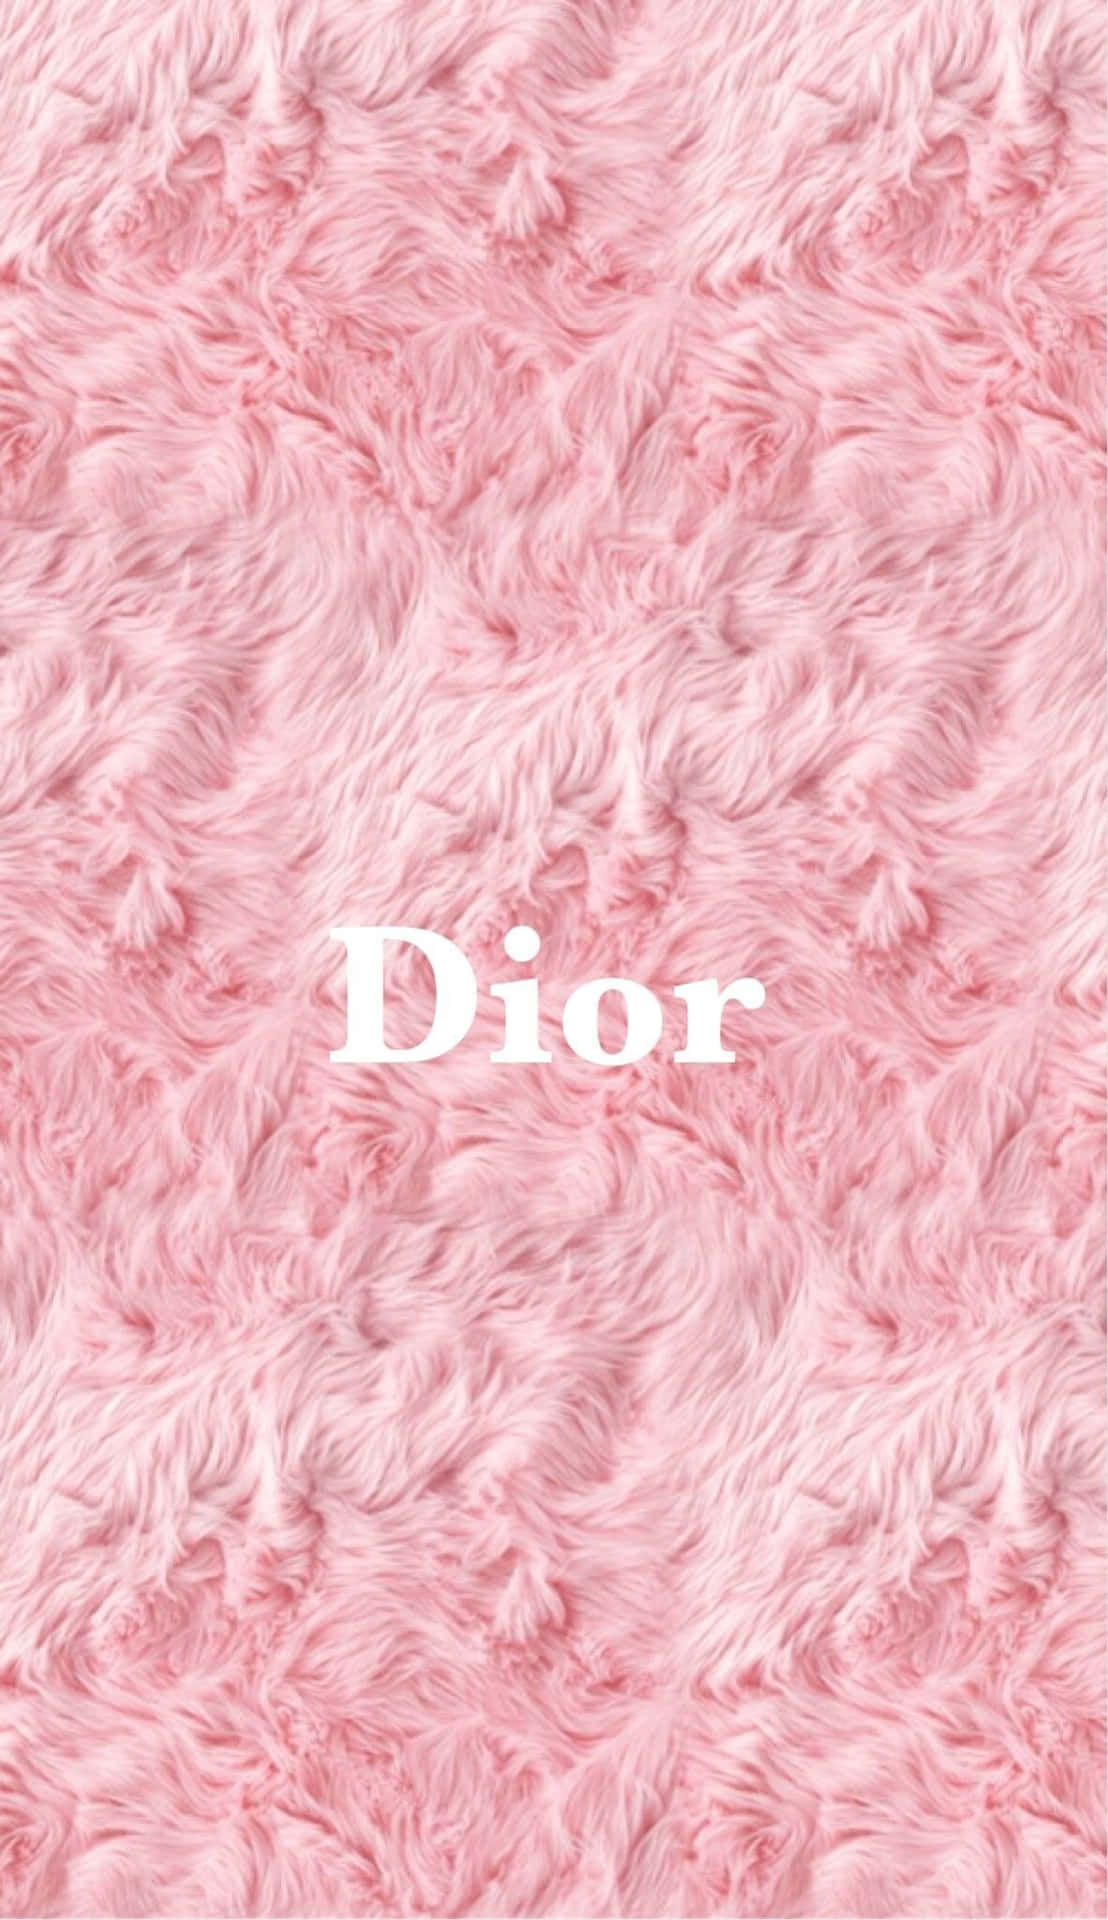 Diorhintergrundbild - Pinkes, Pelziges Wallpaper.